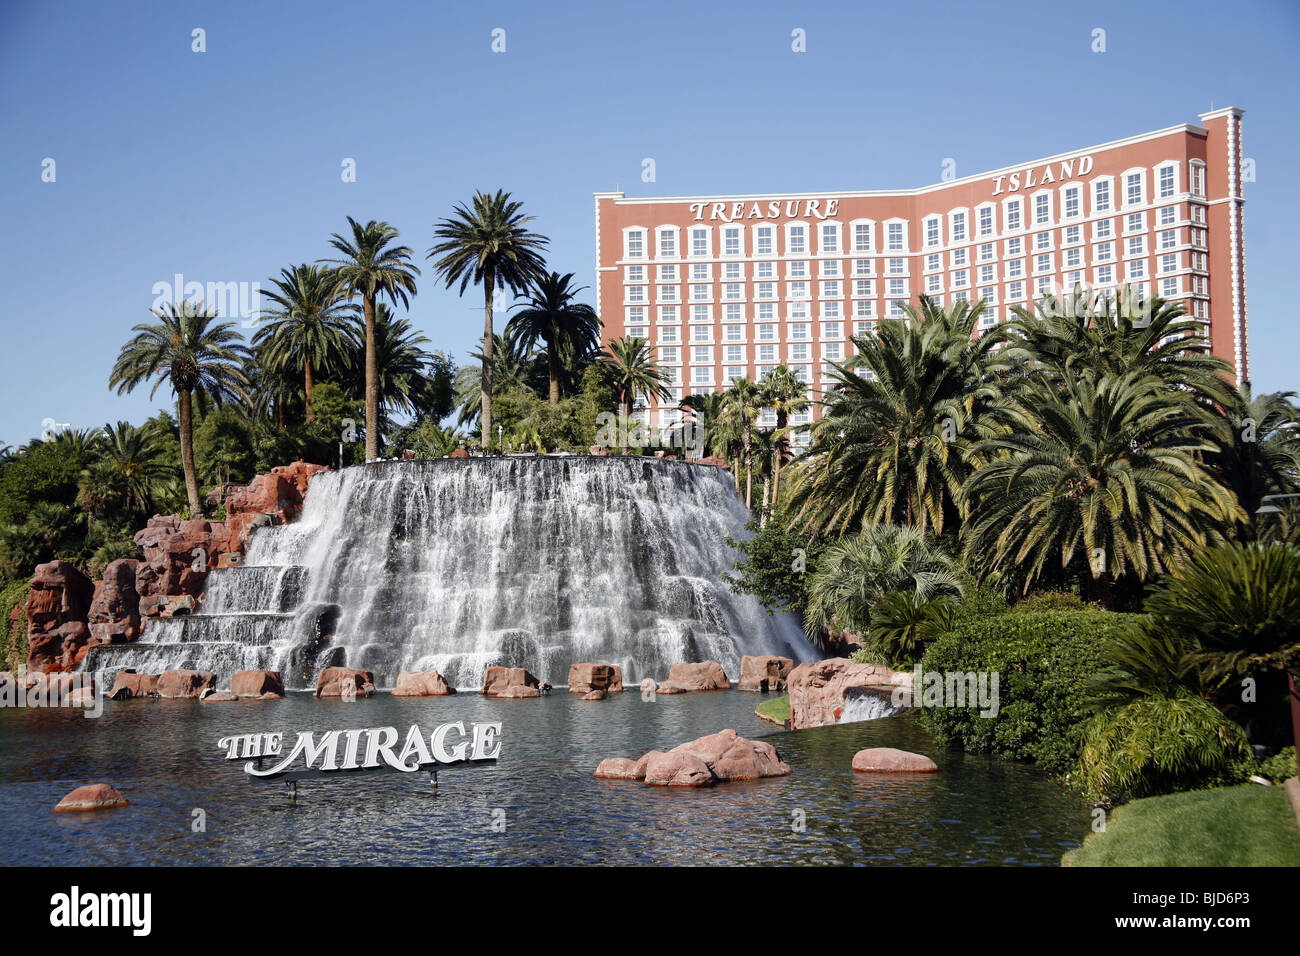 Treasure Island Hotel and Mirage Hotel and Casino in Las Vegas, Nevada, USA Stock Photo